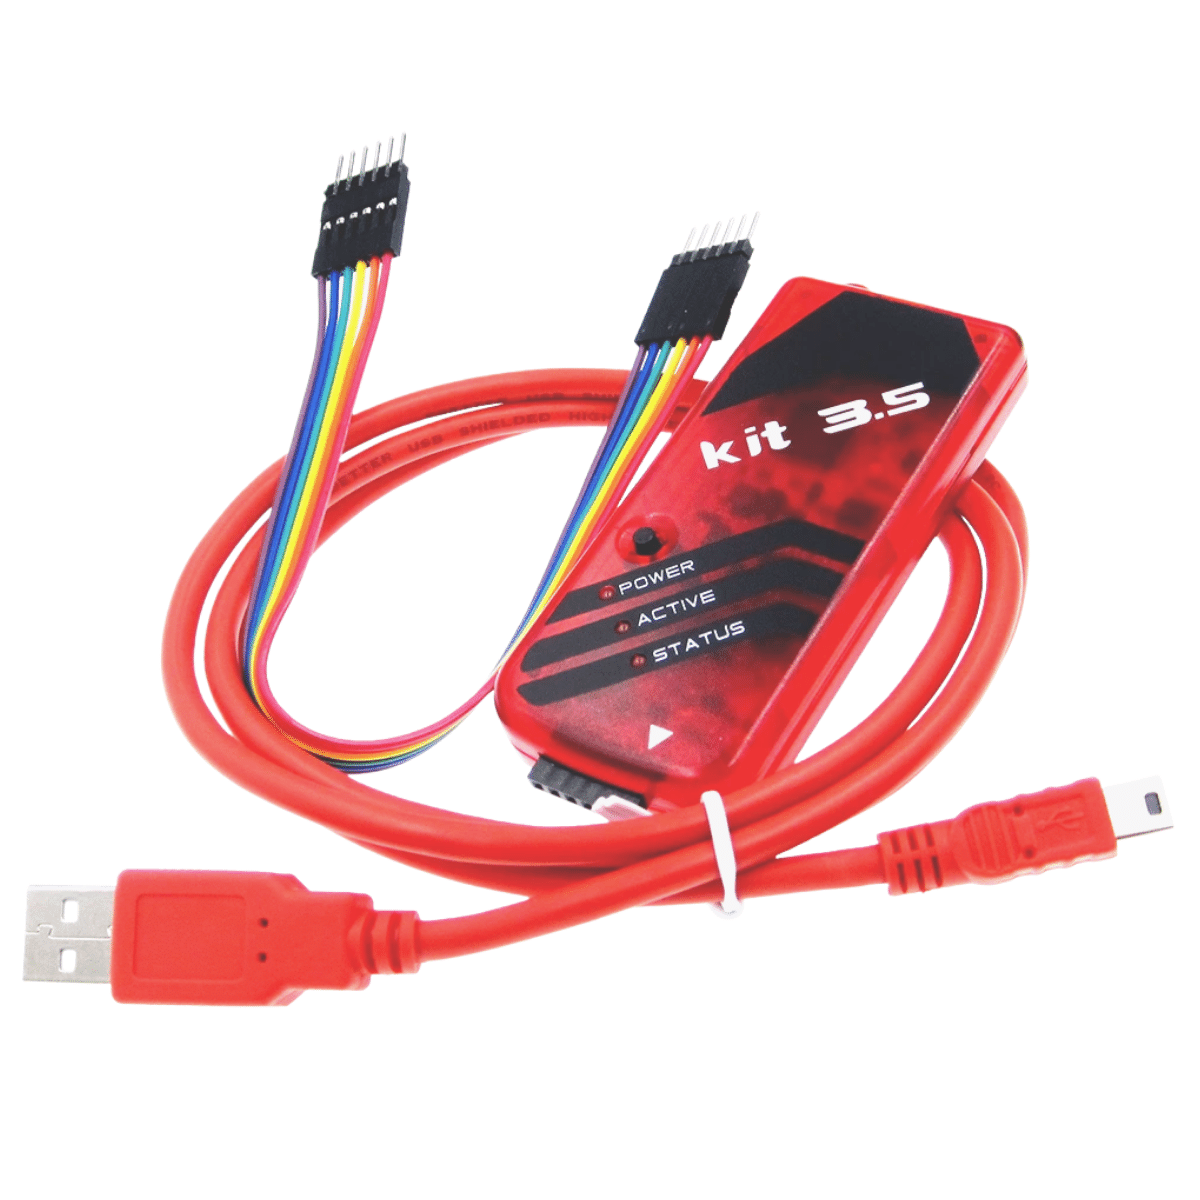 Programador / Gravador de PIC USB PicKit3.5 para Microcontroladores